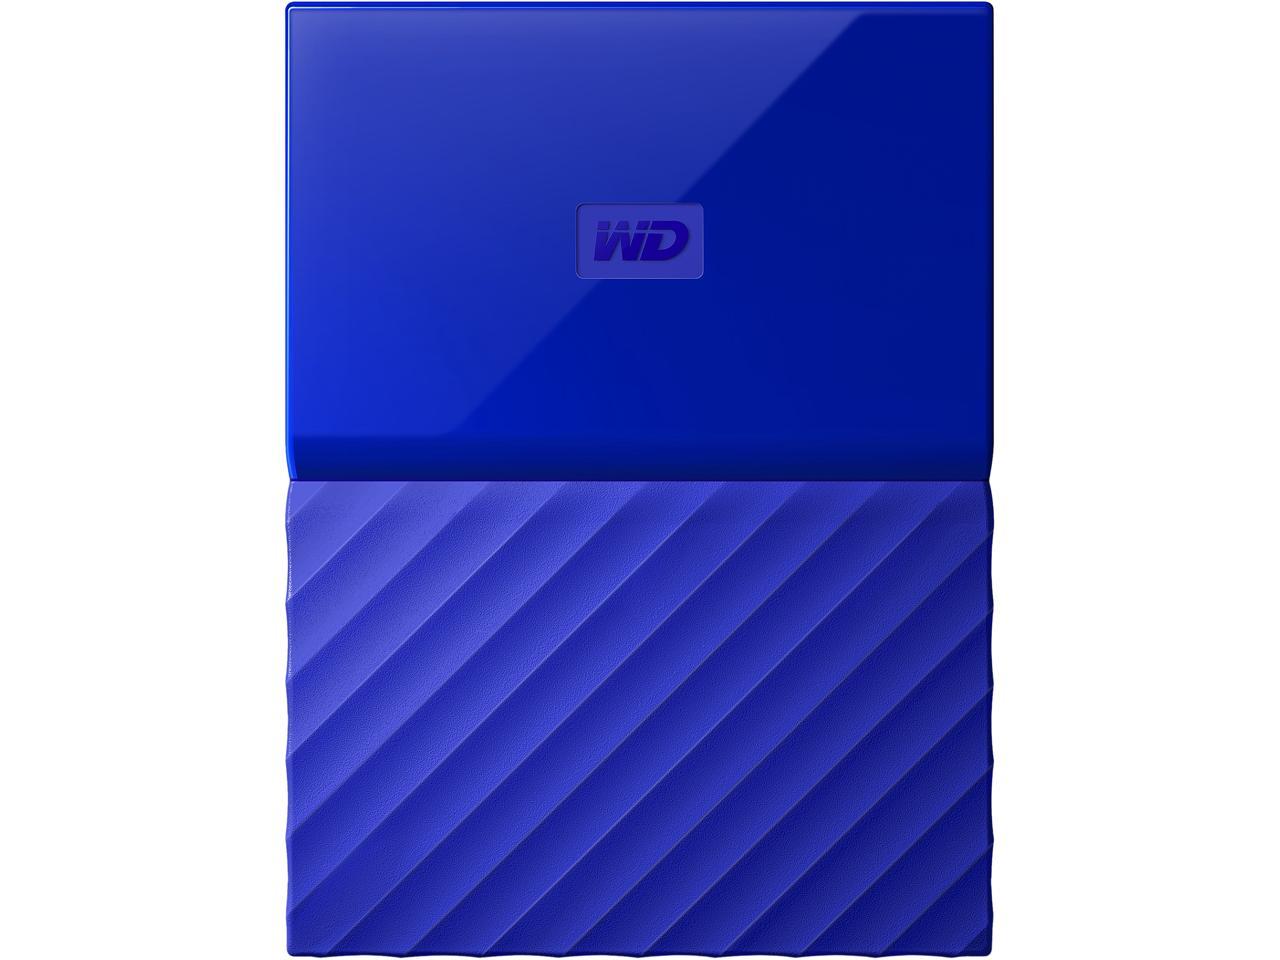 WD 3TB My Passport Portable Hard Drive USB 3.0 Model WDBYFT0030BBL-WESN Blue